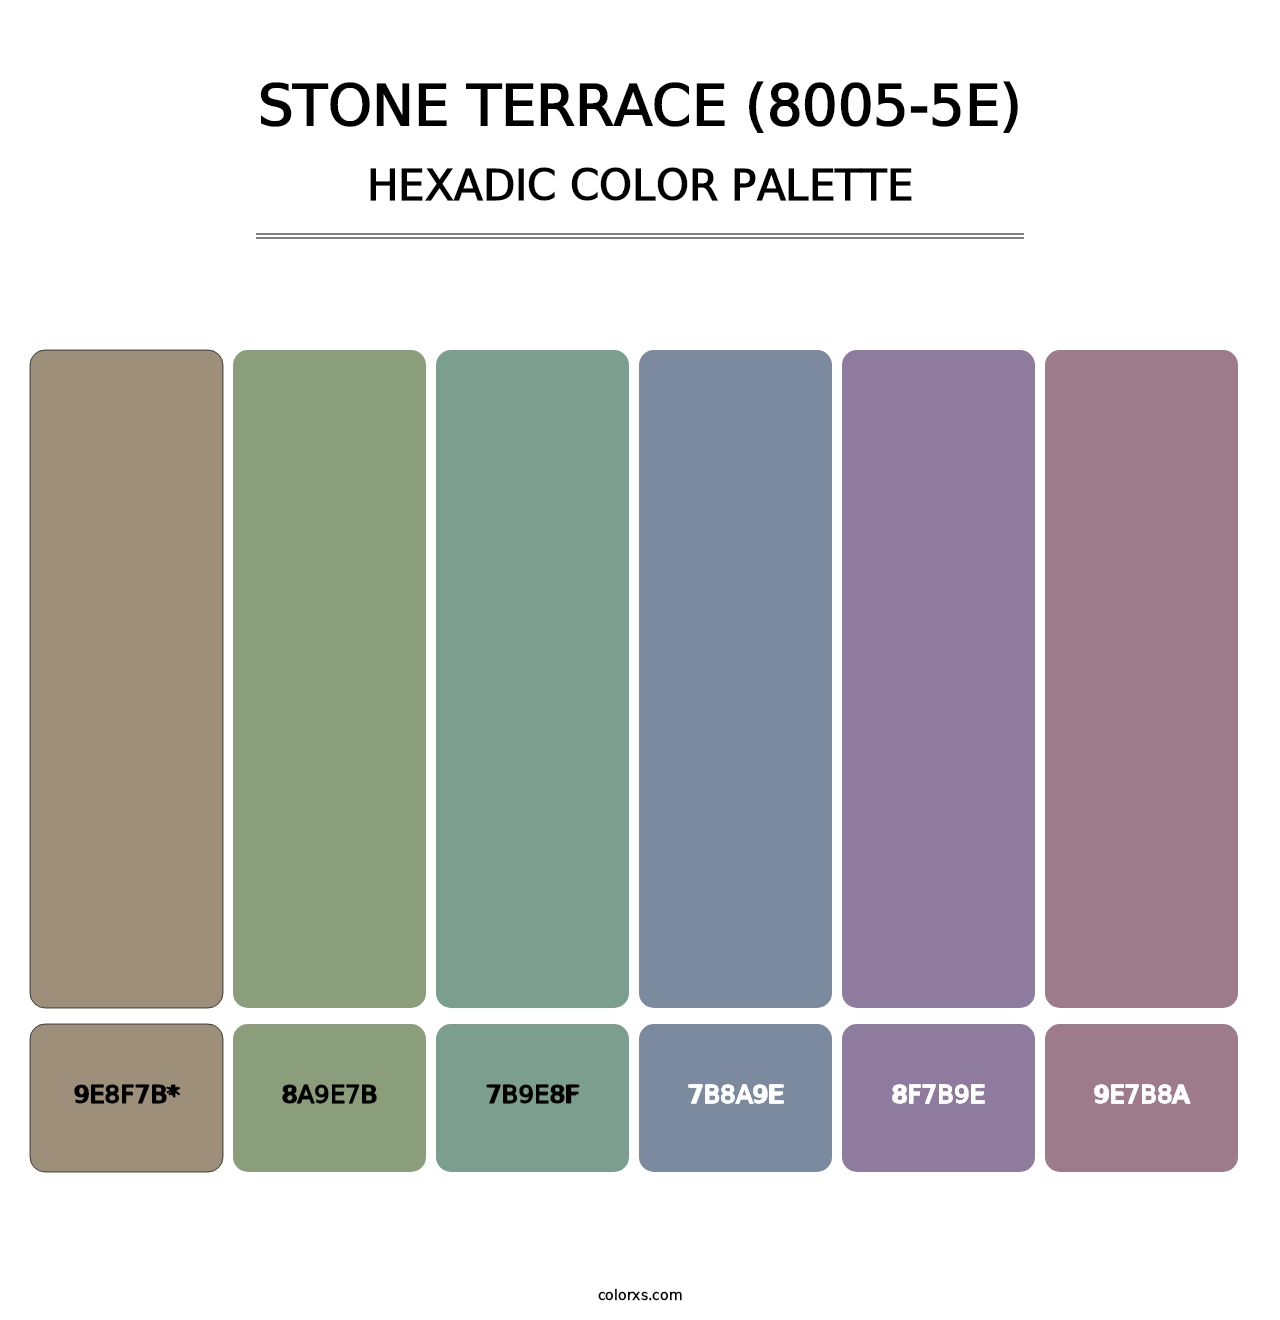 Stone Terrace (8005-5E) - Hexadic Color Palette